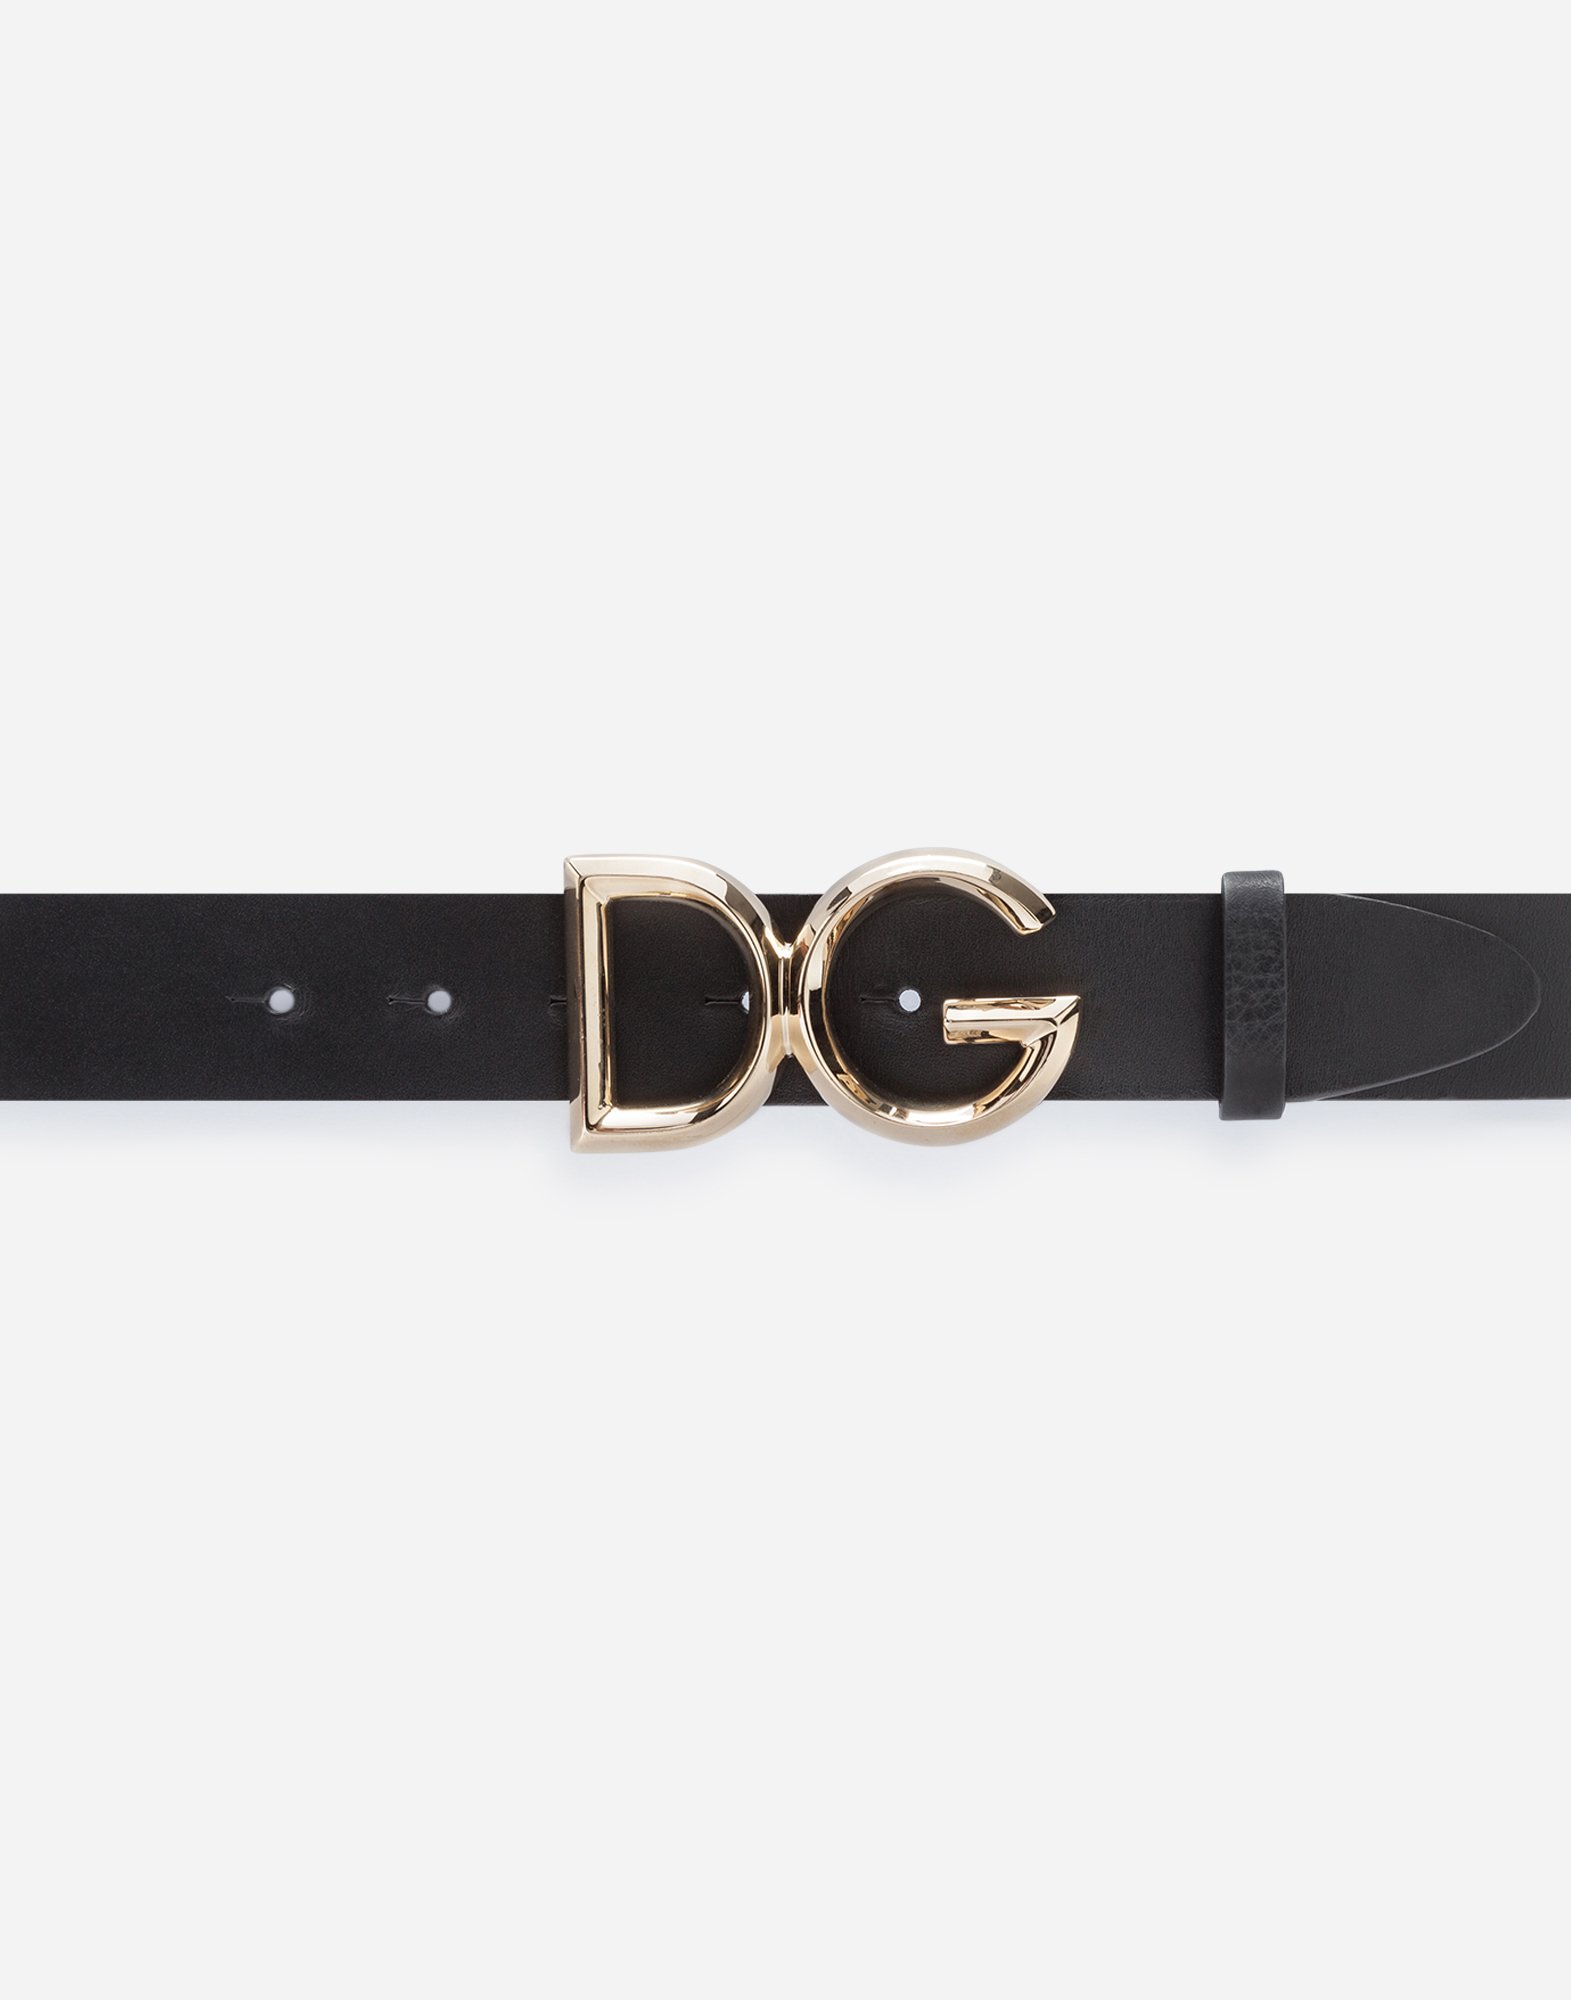 Luxury leather belt with DG logo